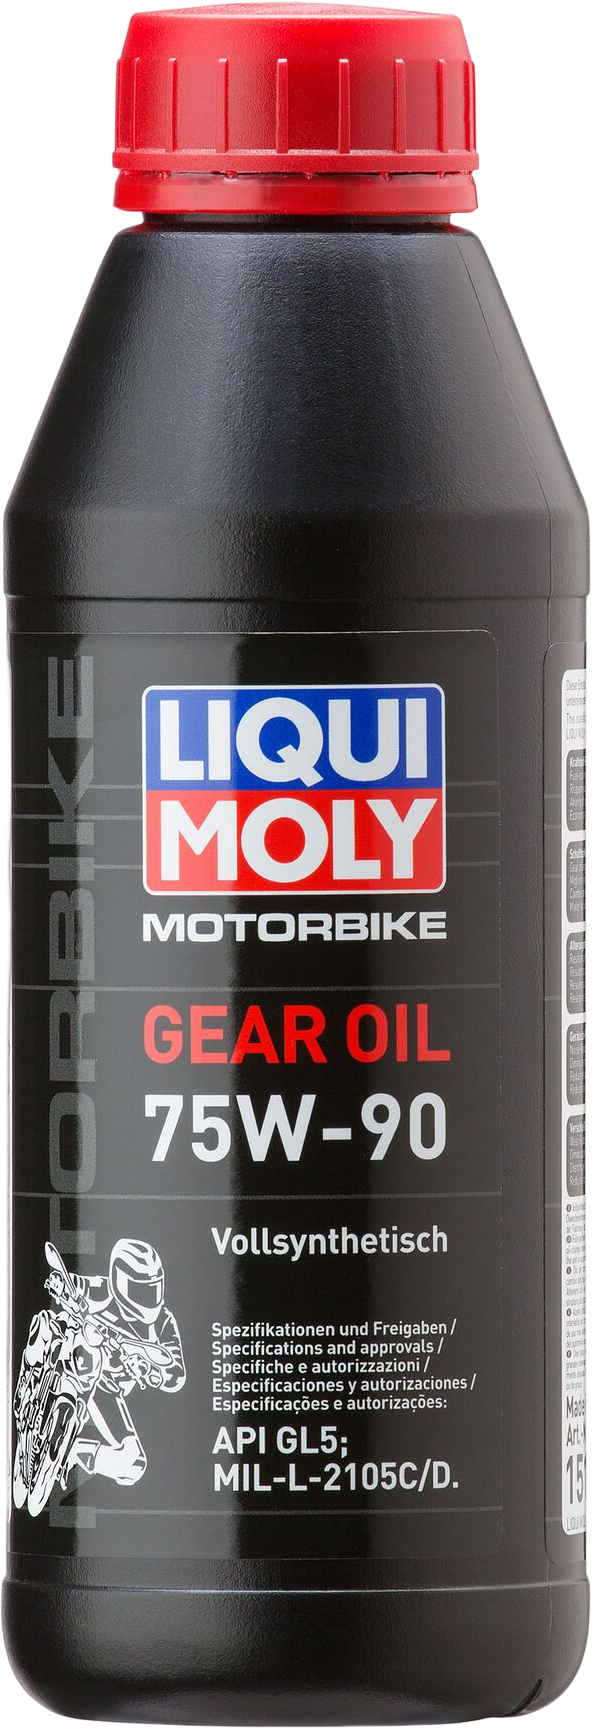 Liqui Moly Motorbike Transmissieolie 75W-90, 500 ml